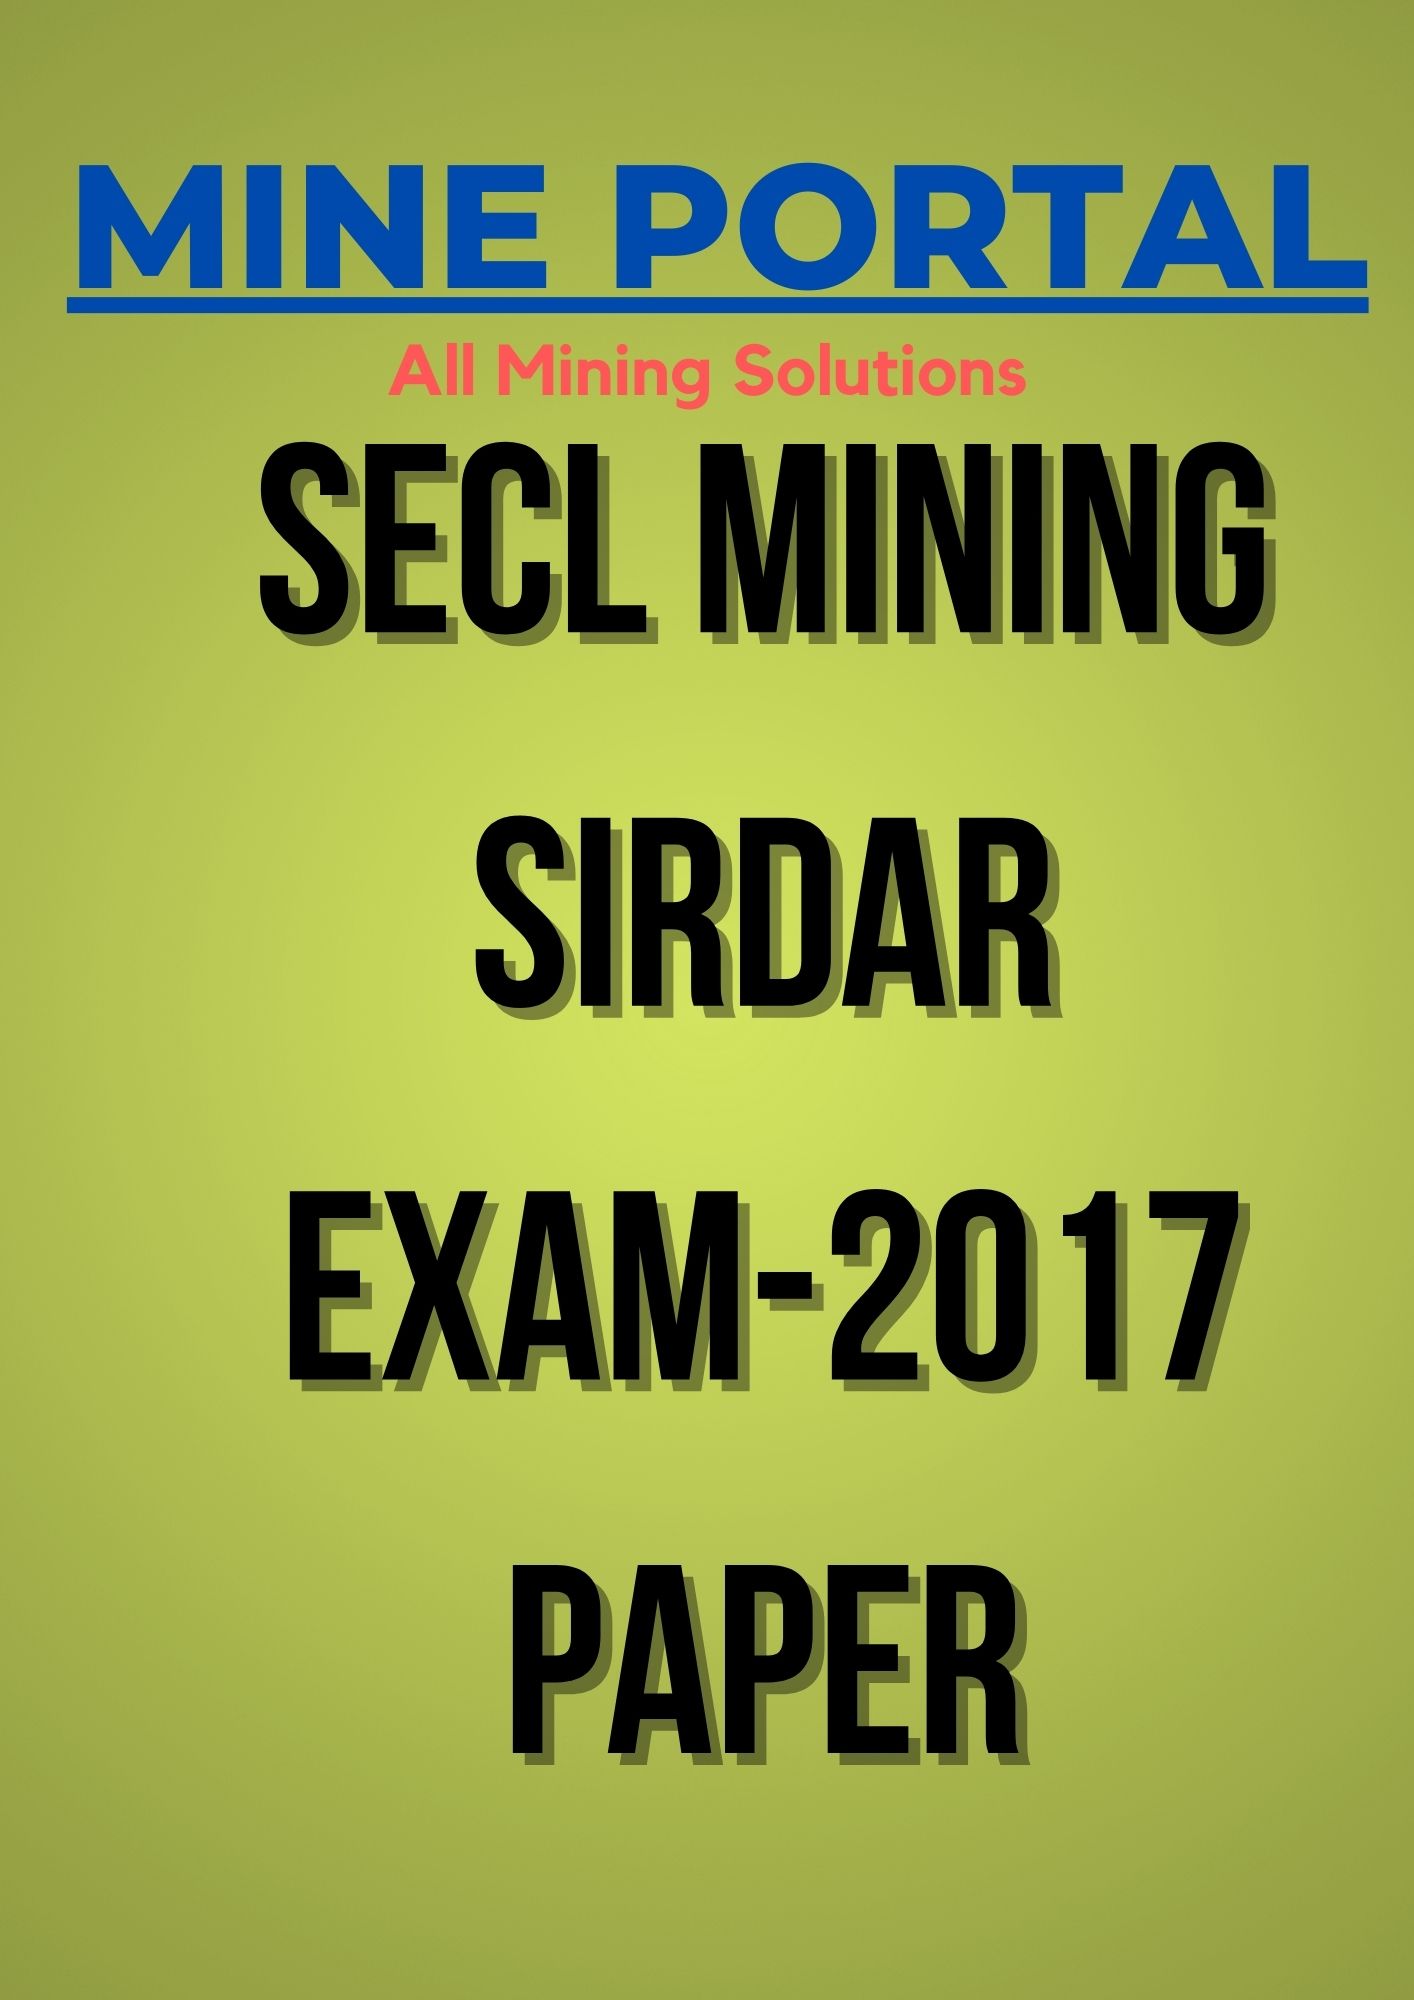 SECL MINING SIRDAR EXAM-2017 PAPER